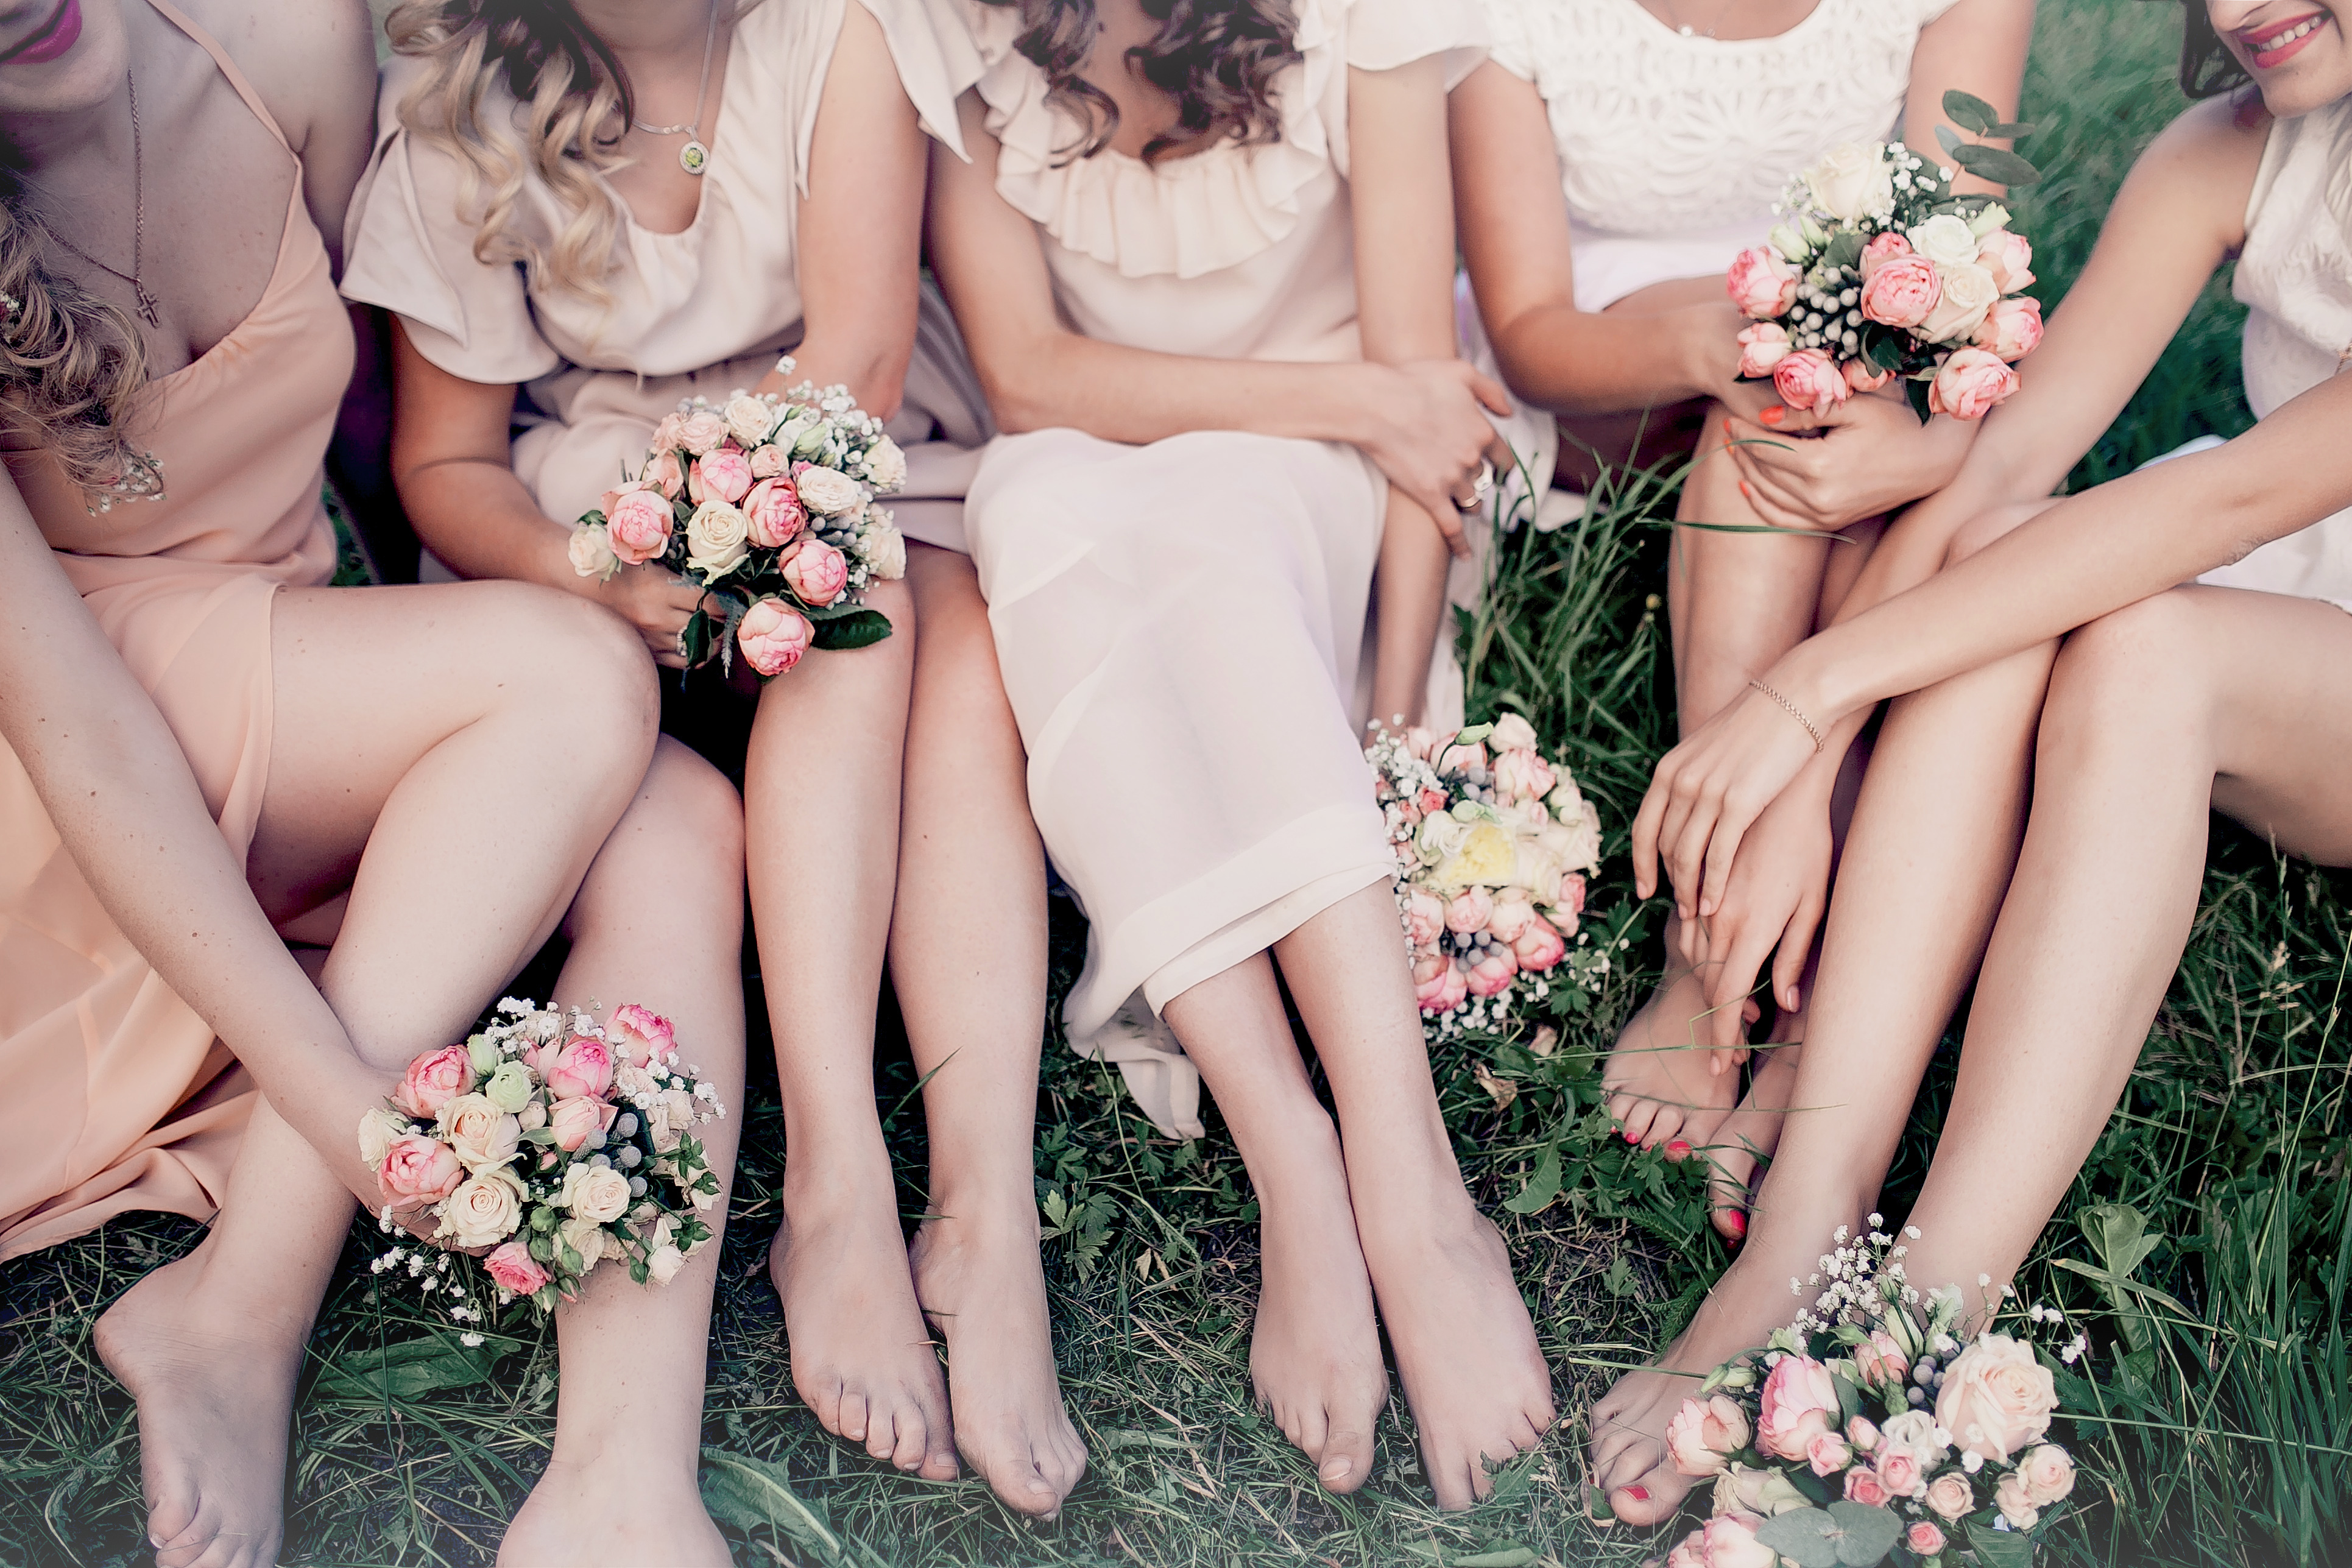 Femmes assises ensemble | Source : Shutterstock